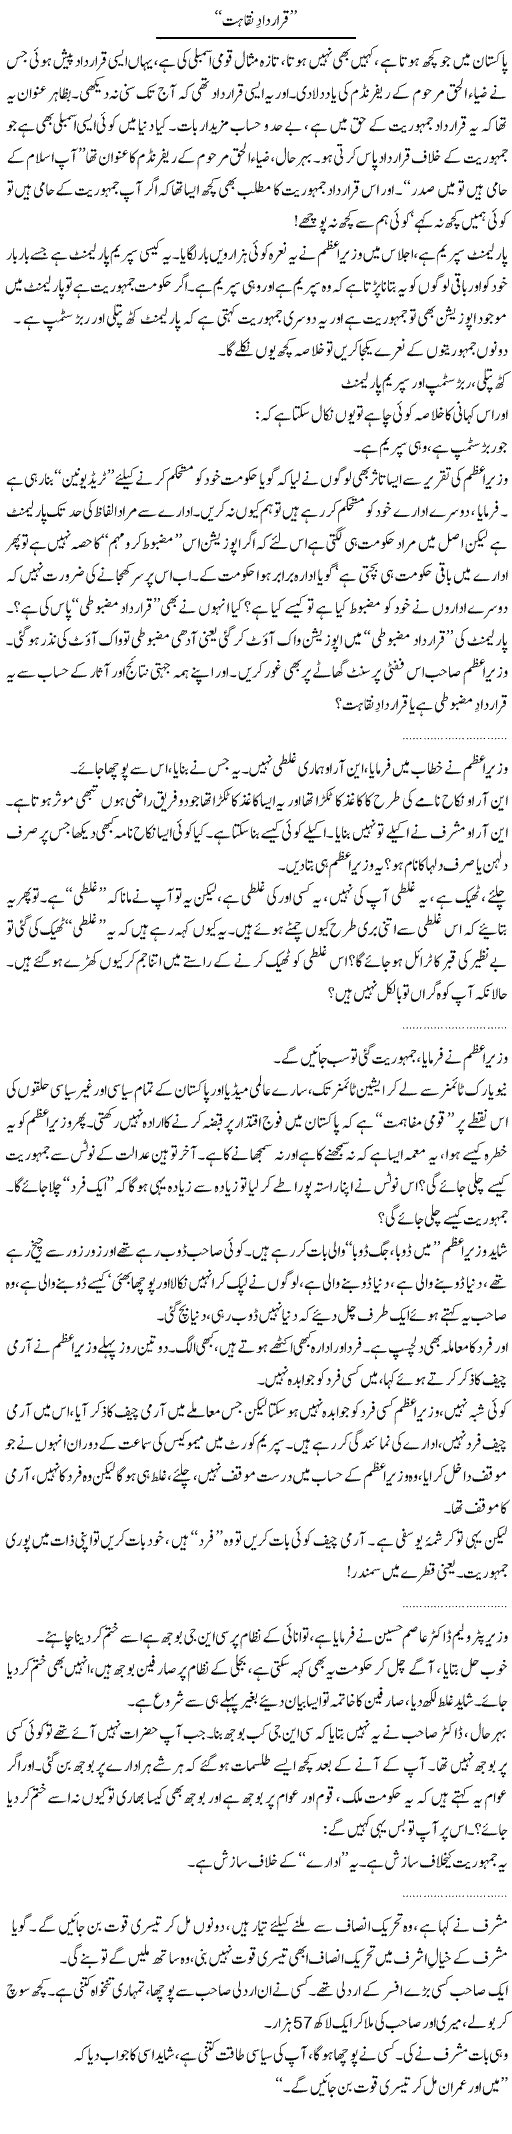 PM Gilani Express Column Abdullah Tariq 18 January 2012